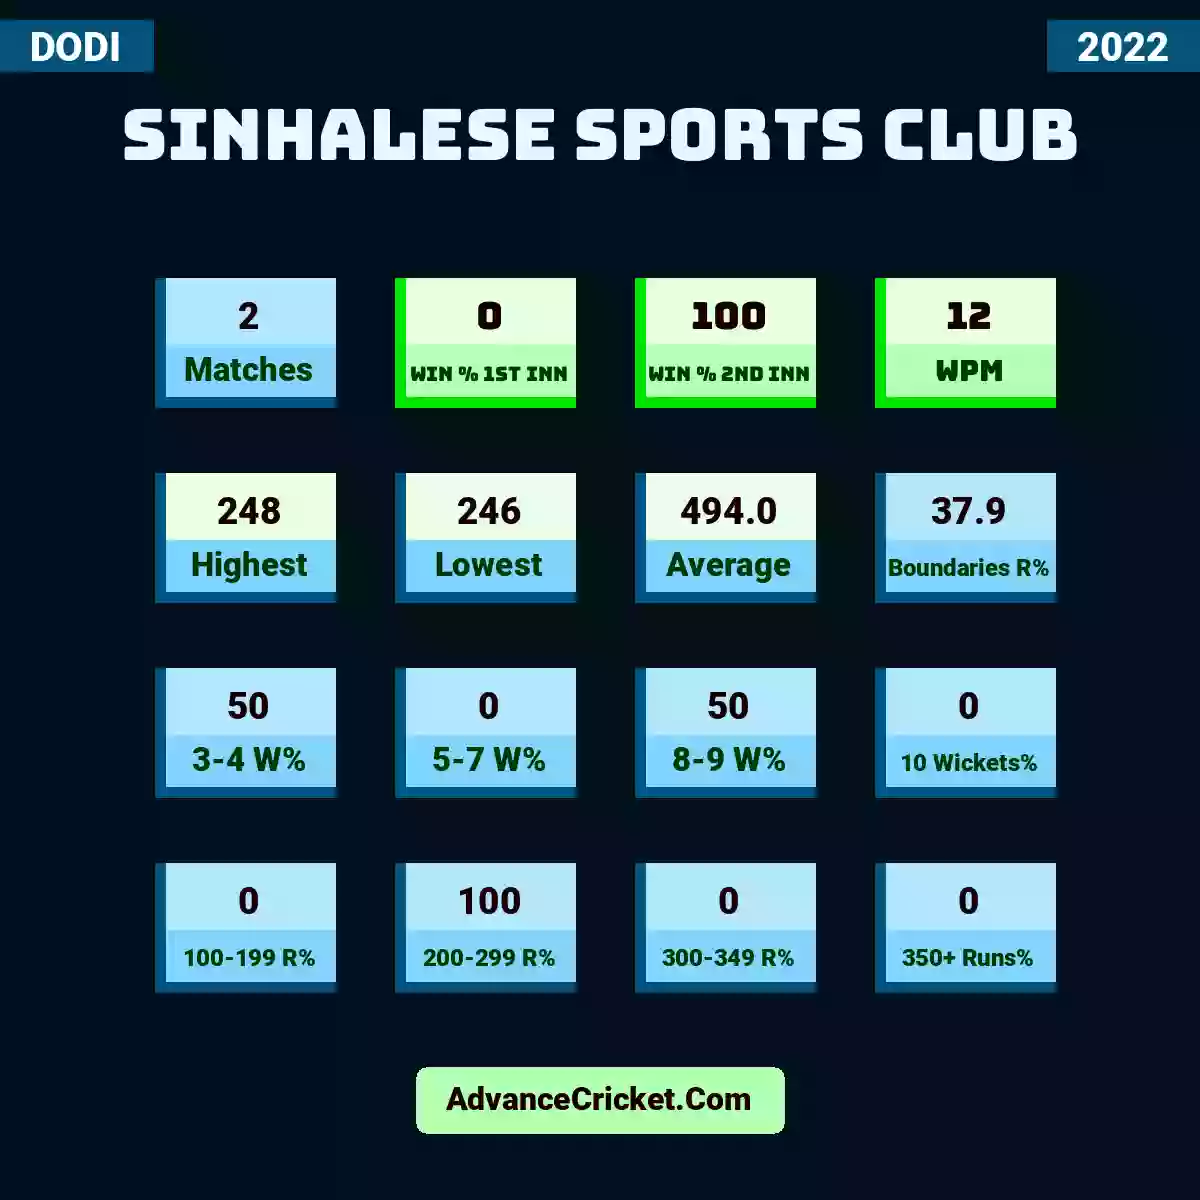 Image showing Sinhalese Sports Club with Matches: 2, Win % 1st Inn: 0, Win % 2nd Inn: 100, WPM: 12, Highest: 248, Lowest: 246, Average: 494.0, Boundaries R%: 37.9, 3-4 W%: 50, 5-7 W%: 0, 8-9 W%: 50, 10 Wickets%: 0, 100-199 R%: 0, 200-299 R%: 100, 300-349 R%: 0, 350+ Runs%: 0.